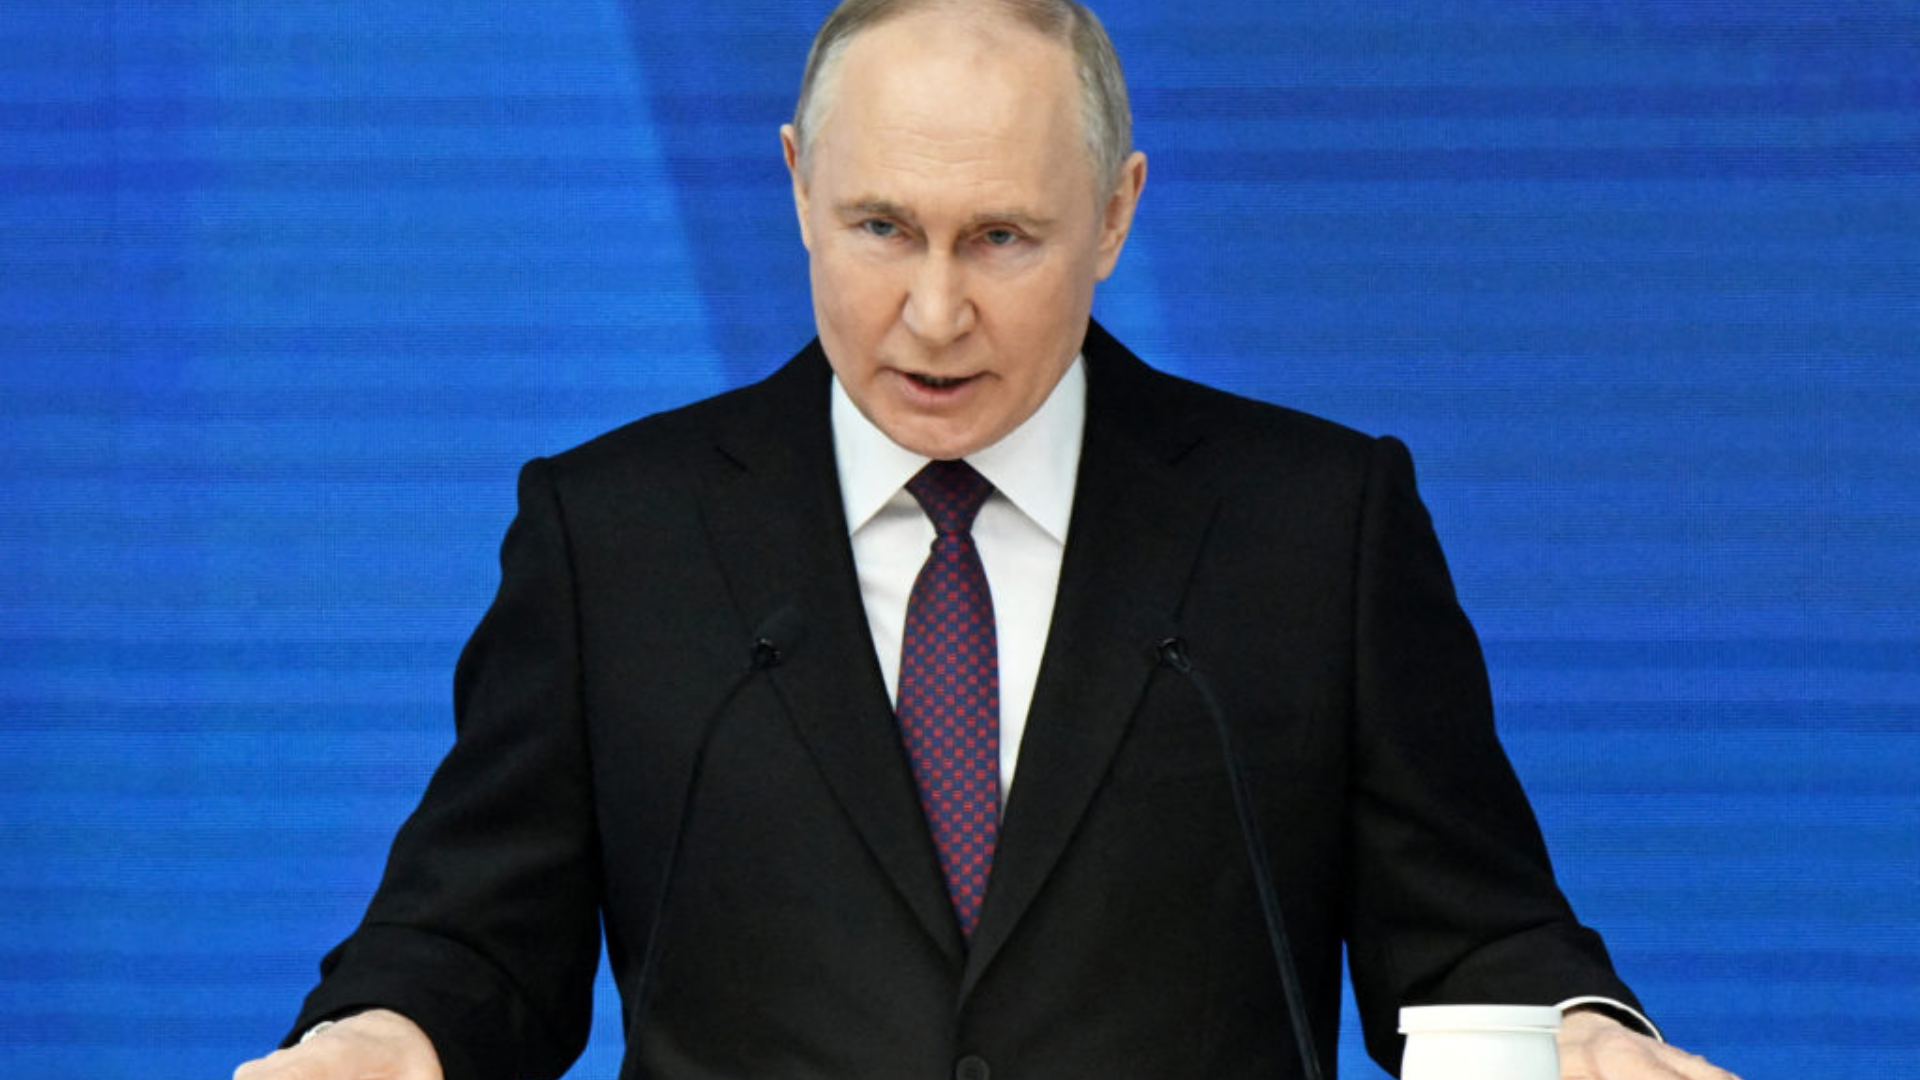 Putin Vows to Safeguard Russia’s Future, Emphasizes Sovereignty